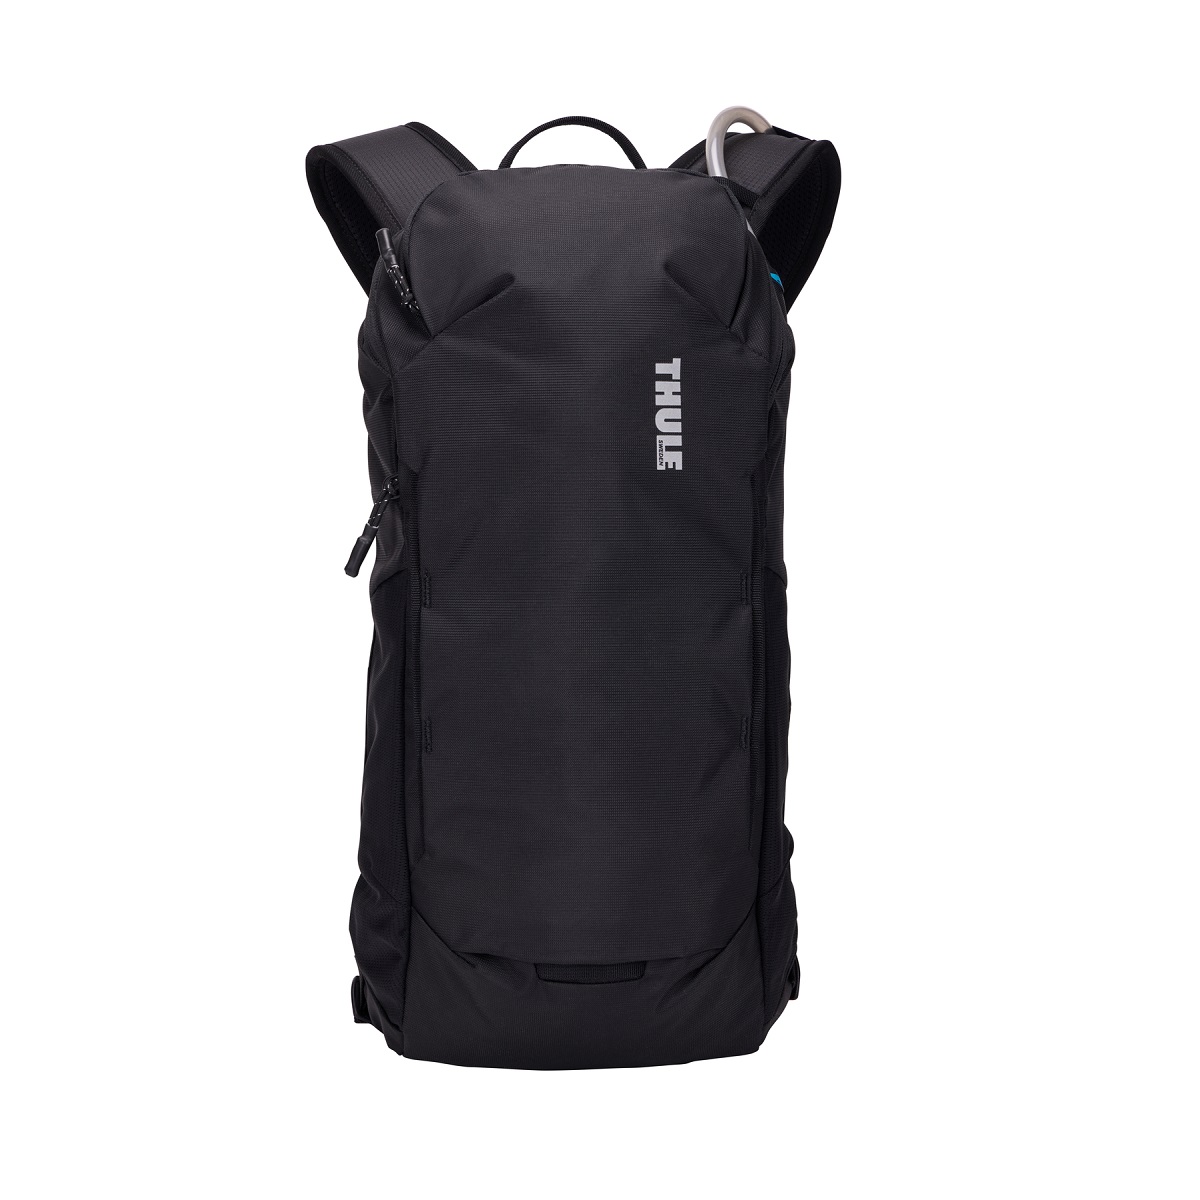 Thule AllTrail hidratacijski ruksak 10 L - crni